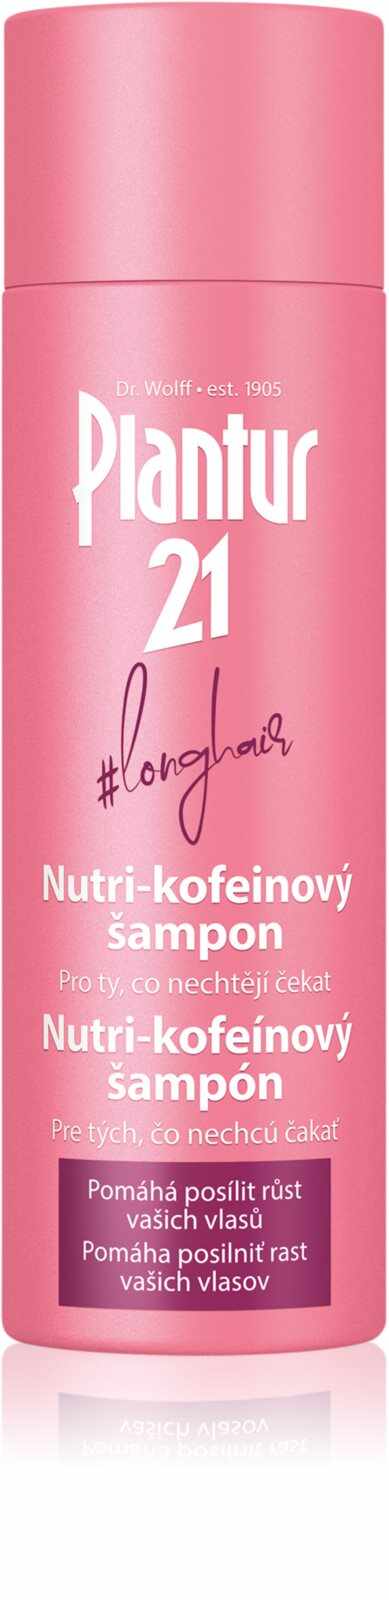 Plantur 21 Longhair Nutri-Caffeine Sampon 200 ml 